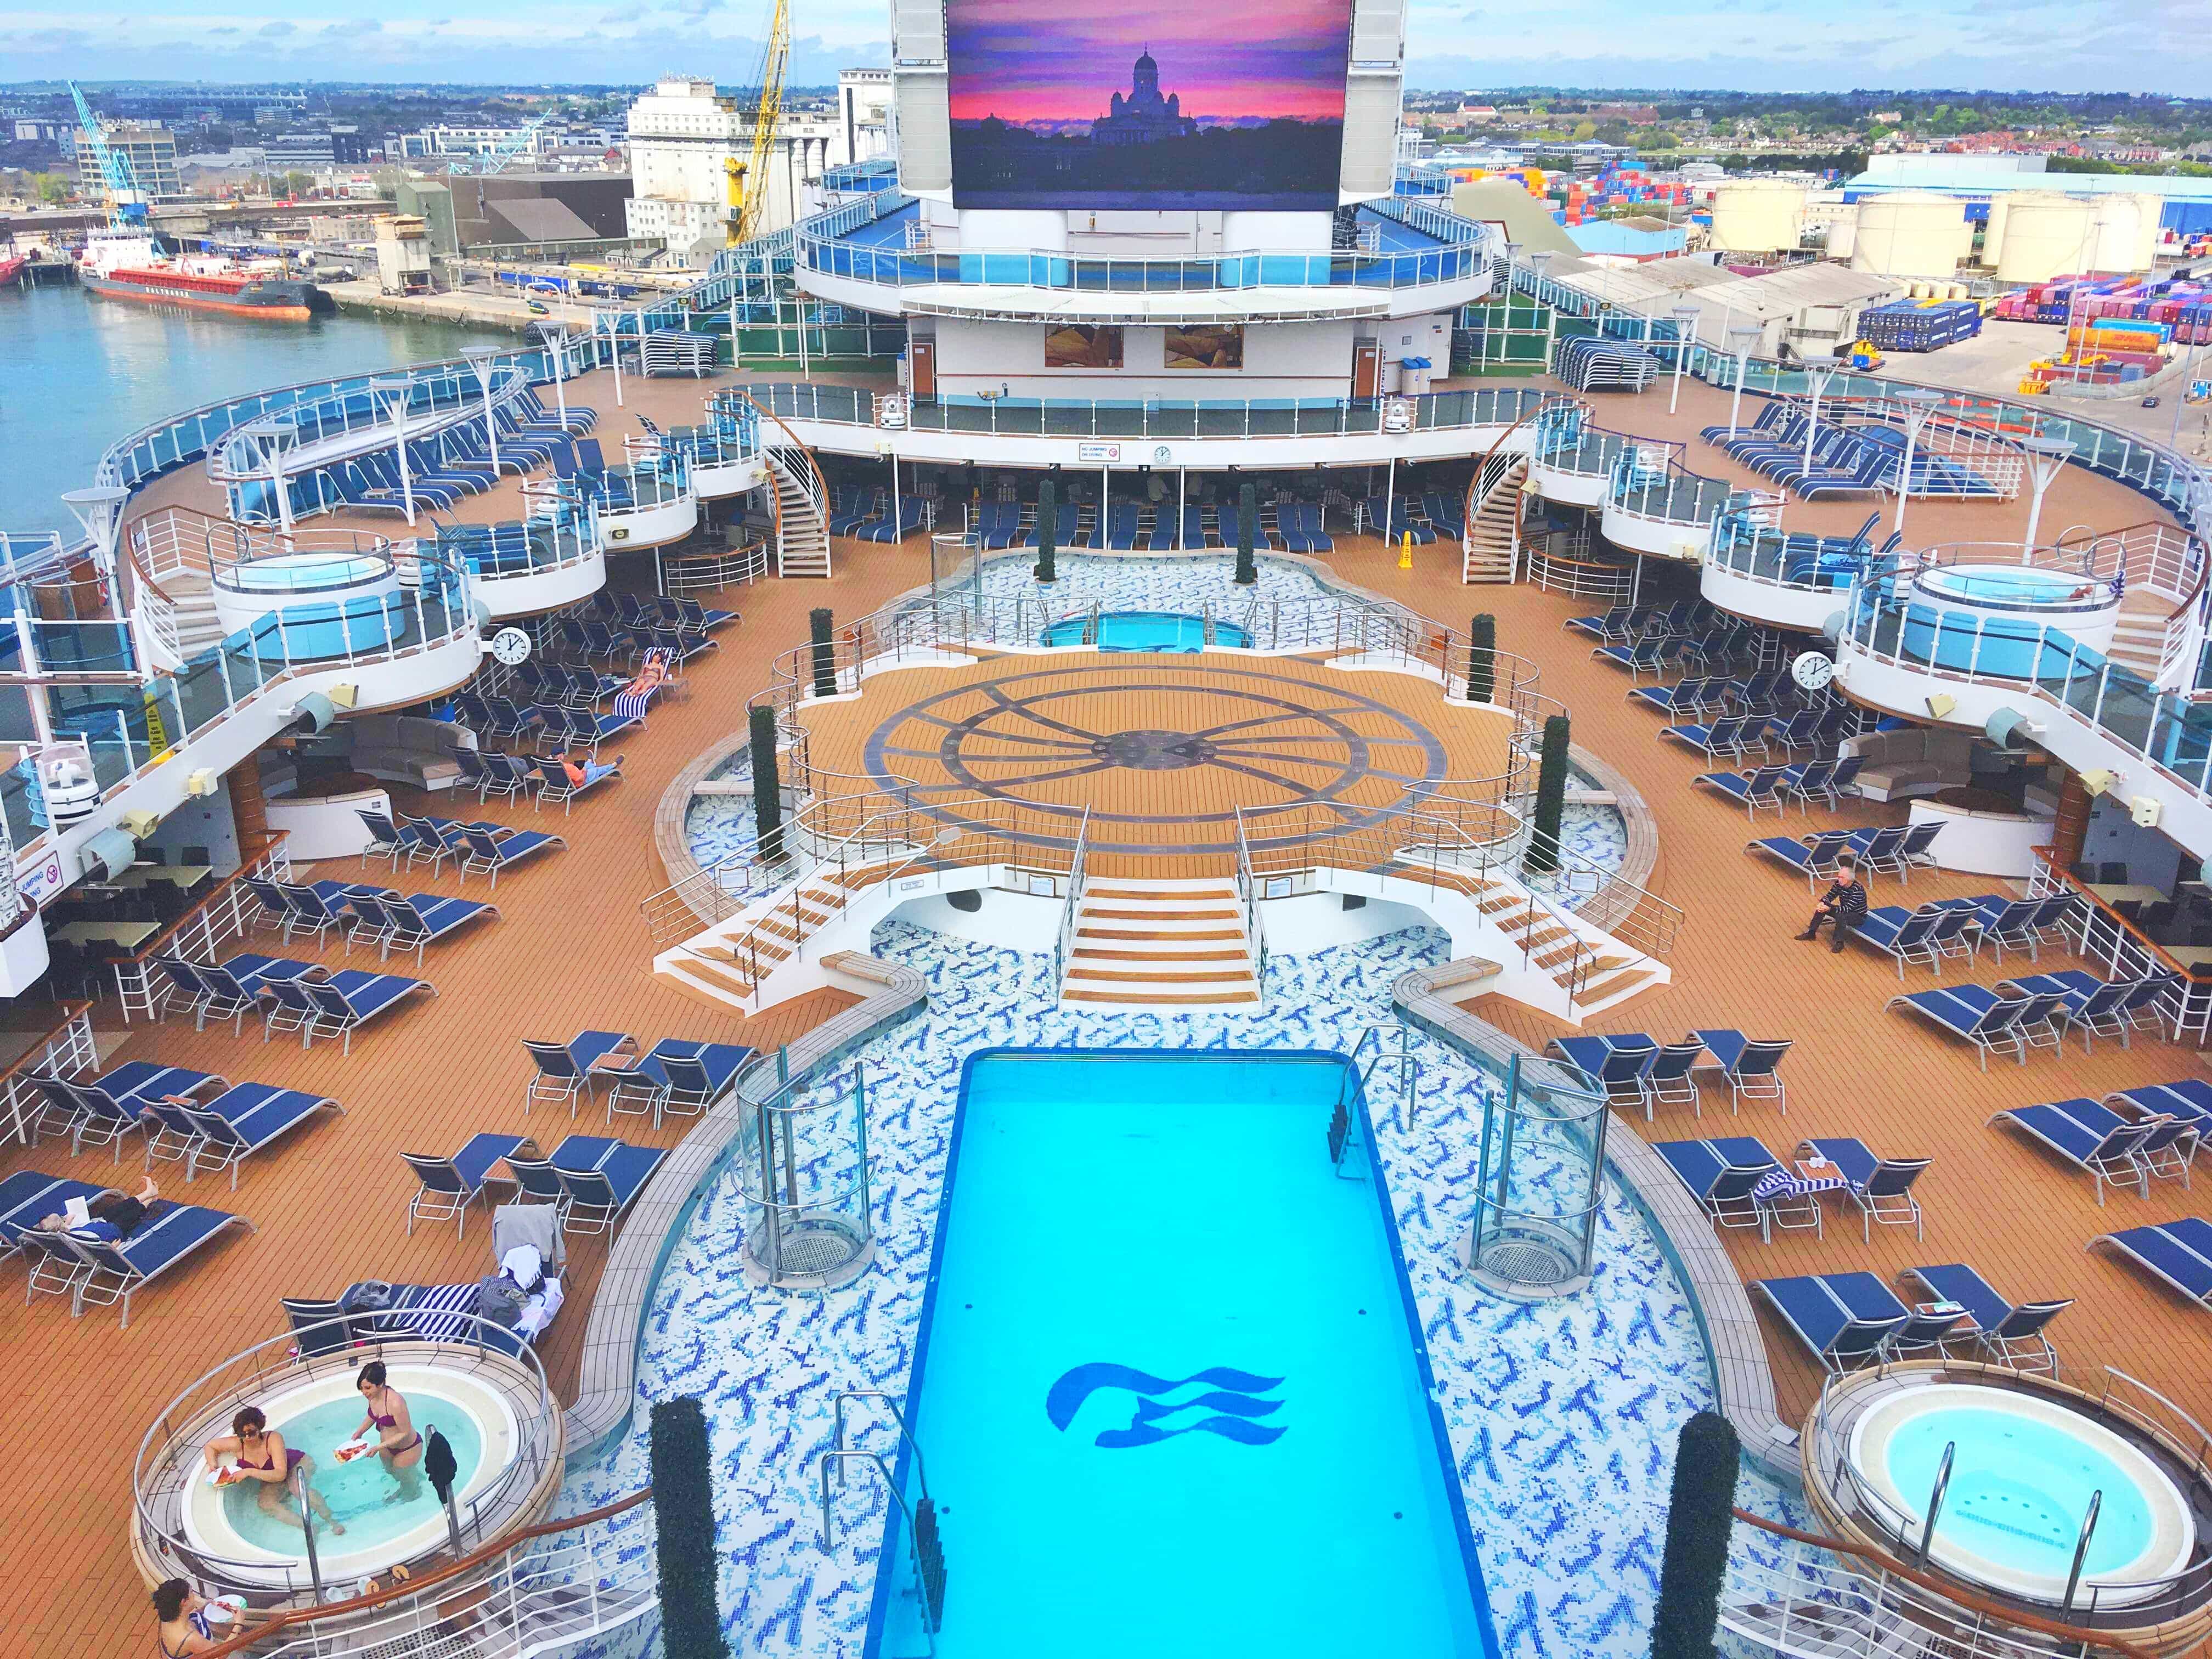 Royal princess british isles cruise top deck swimming pools tv screen hot tubs sun loungers 